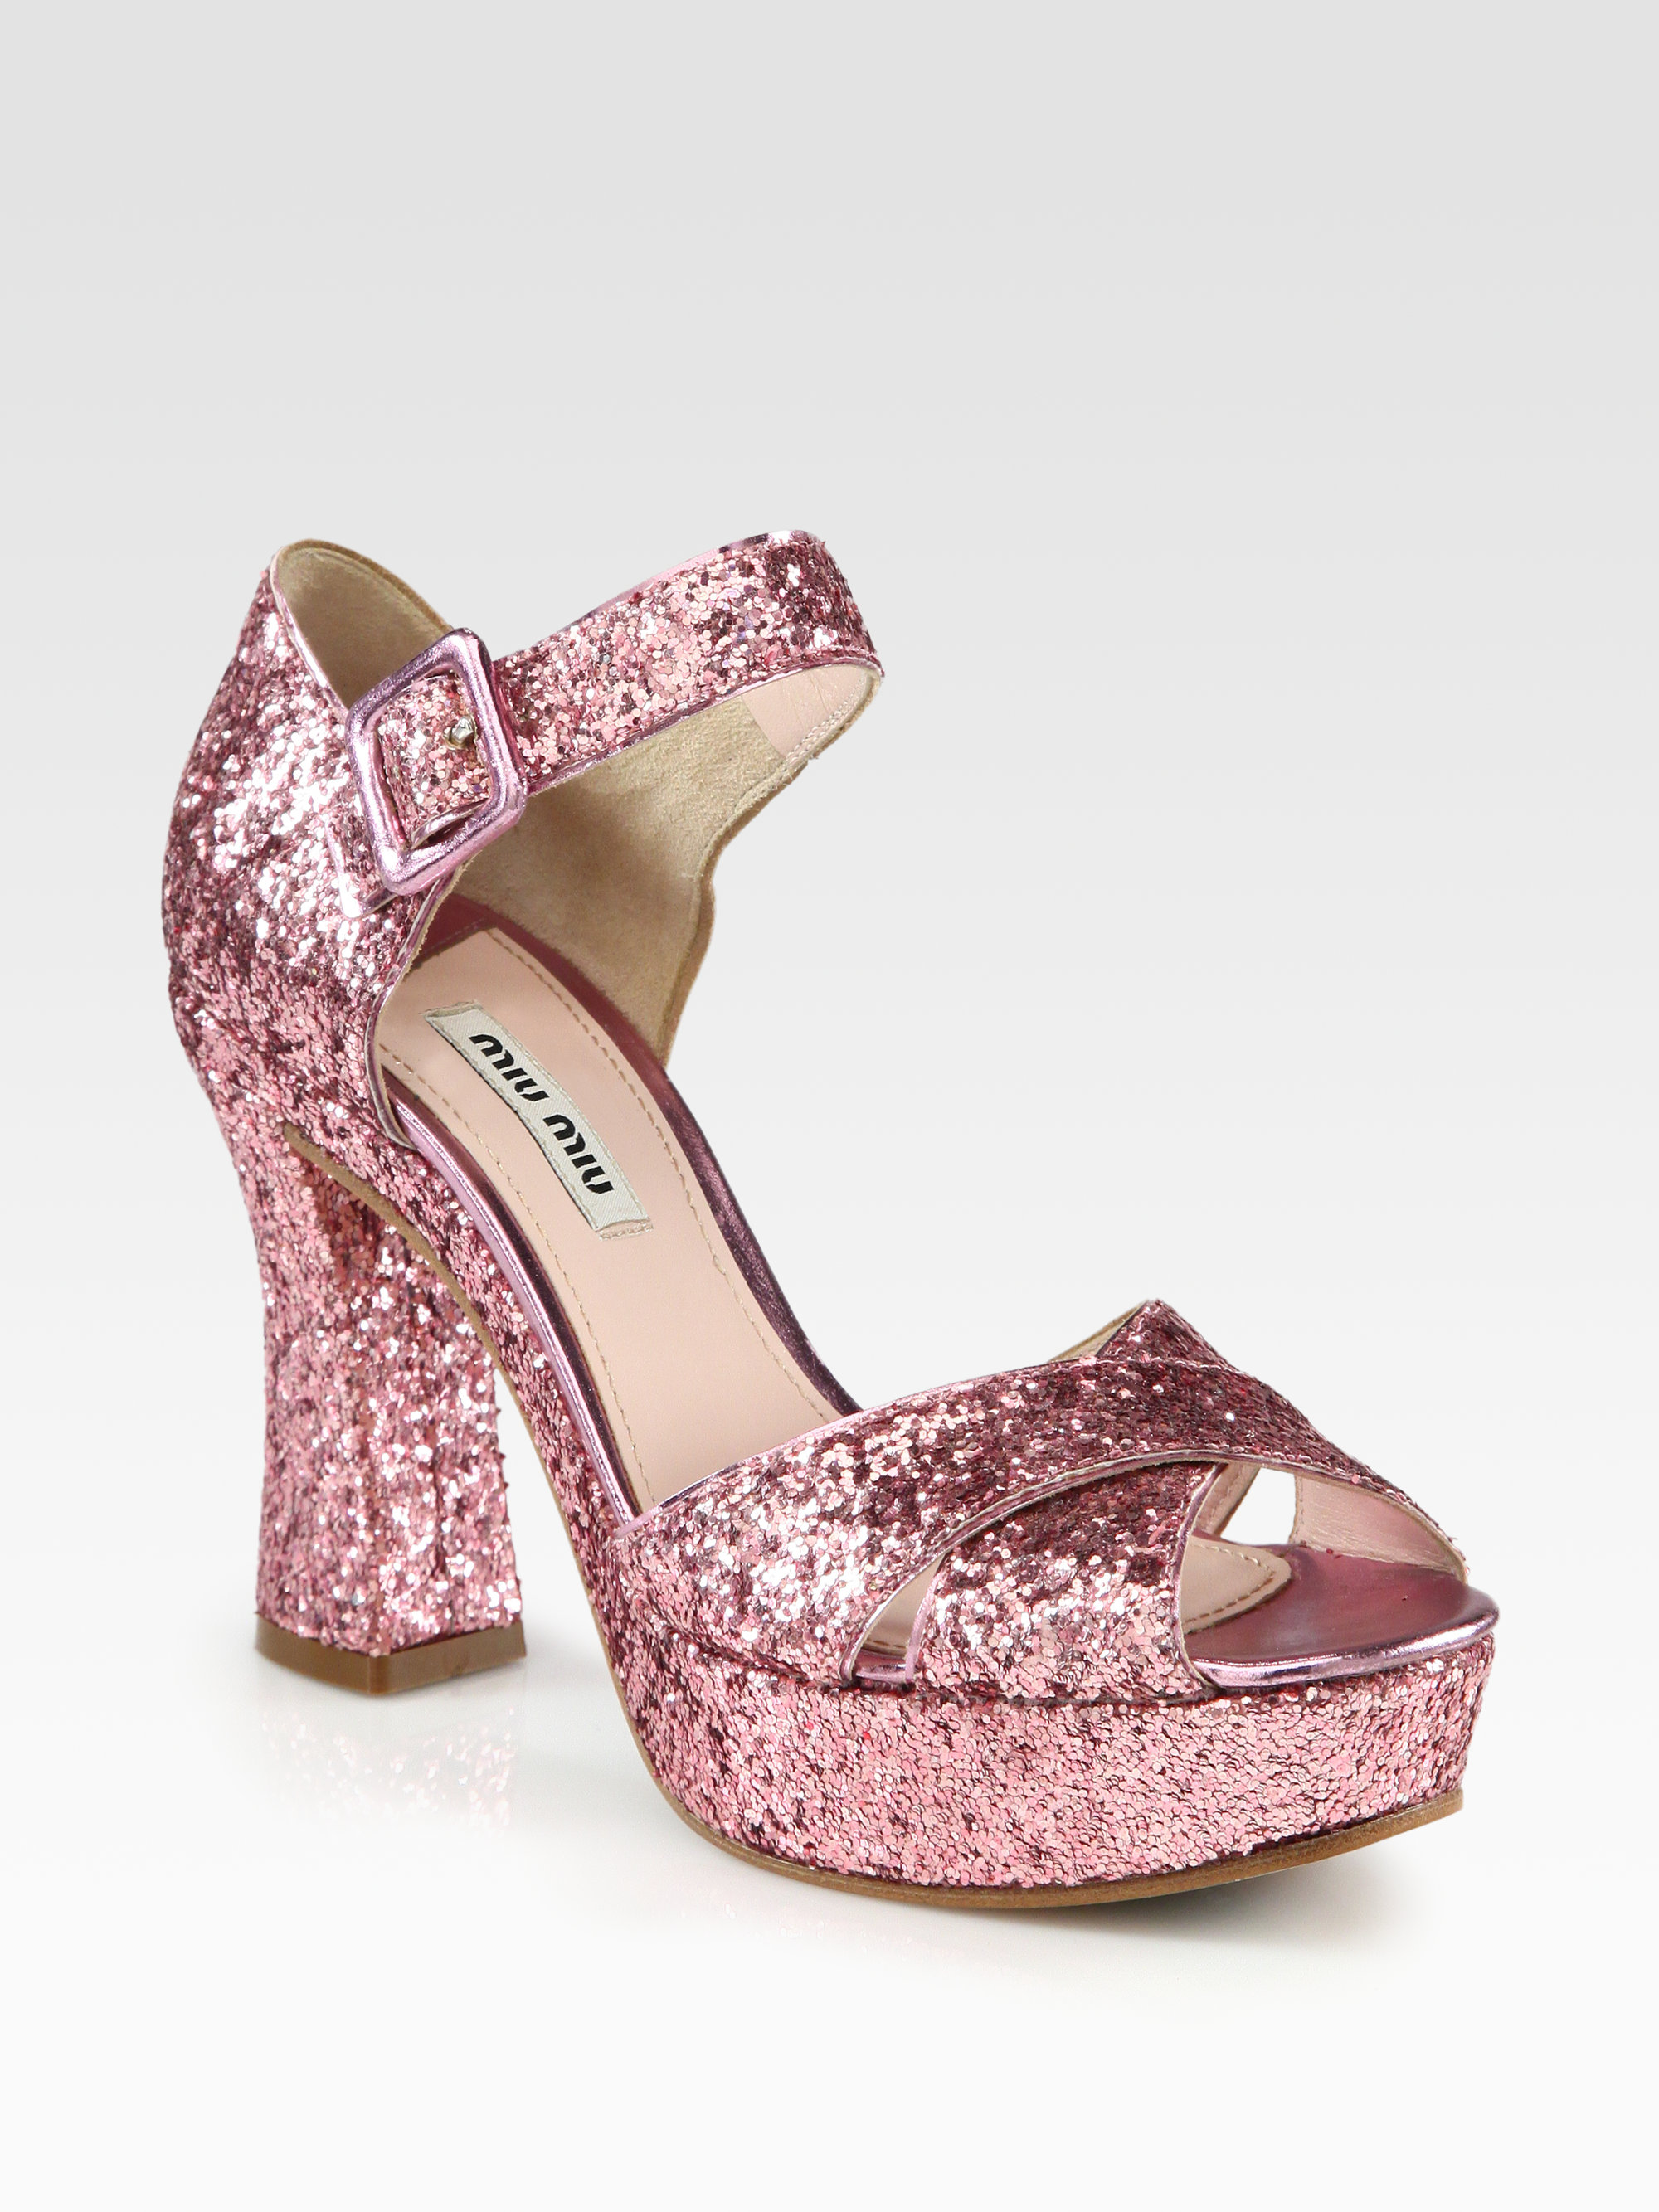 Miu Miu Glitter Crisscross Platform Sandals in Pink | Lyst